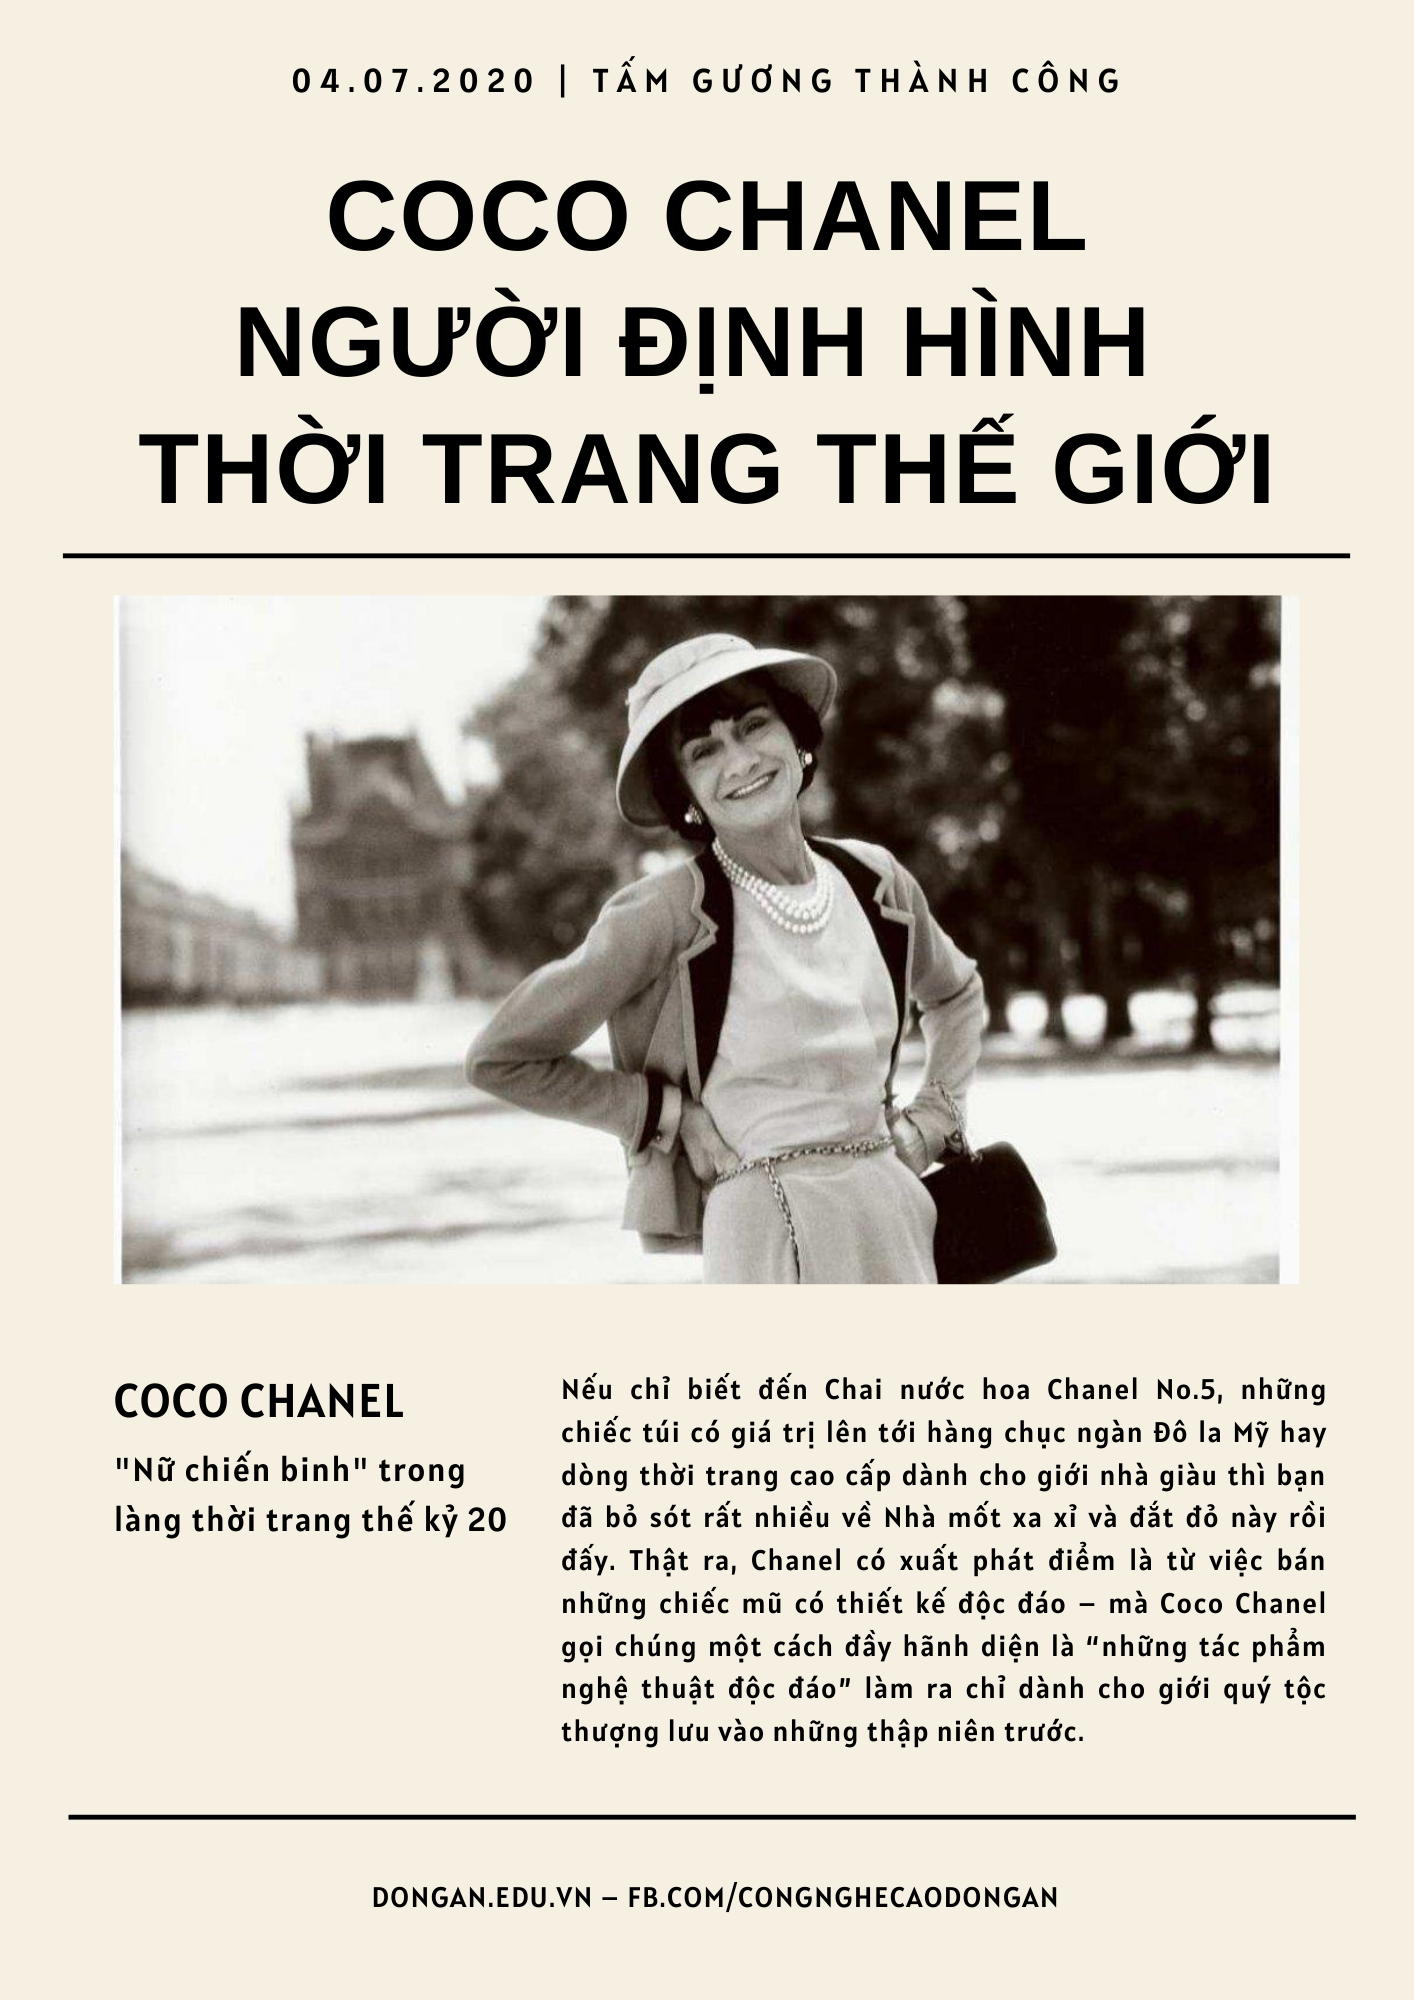 1/coco-chanel-nguoi-dinh-hinh-lai-thoi-trang-the-gioi-1_04072020110330273_kdzkcho5.djz.png